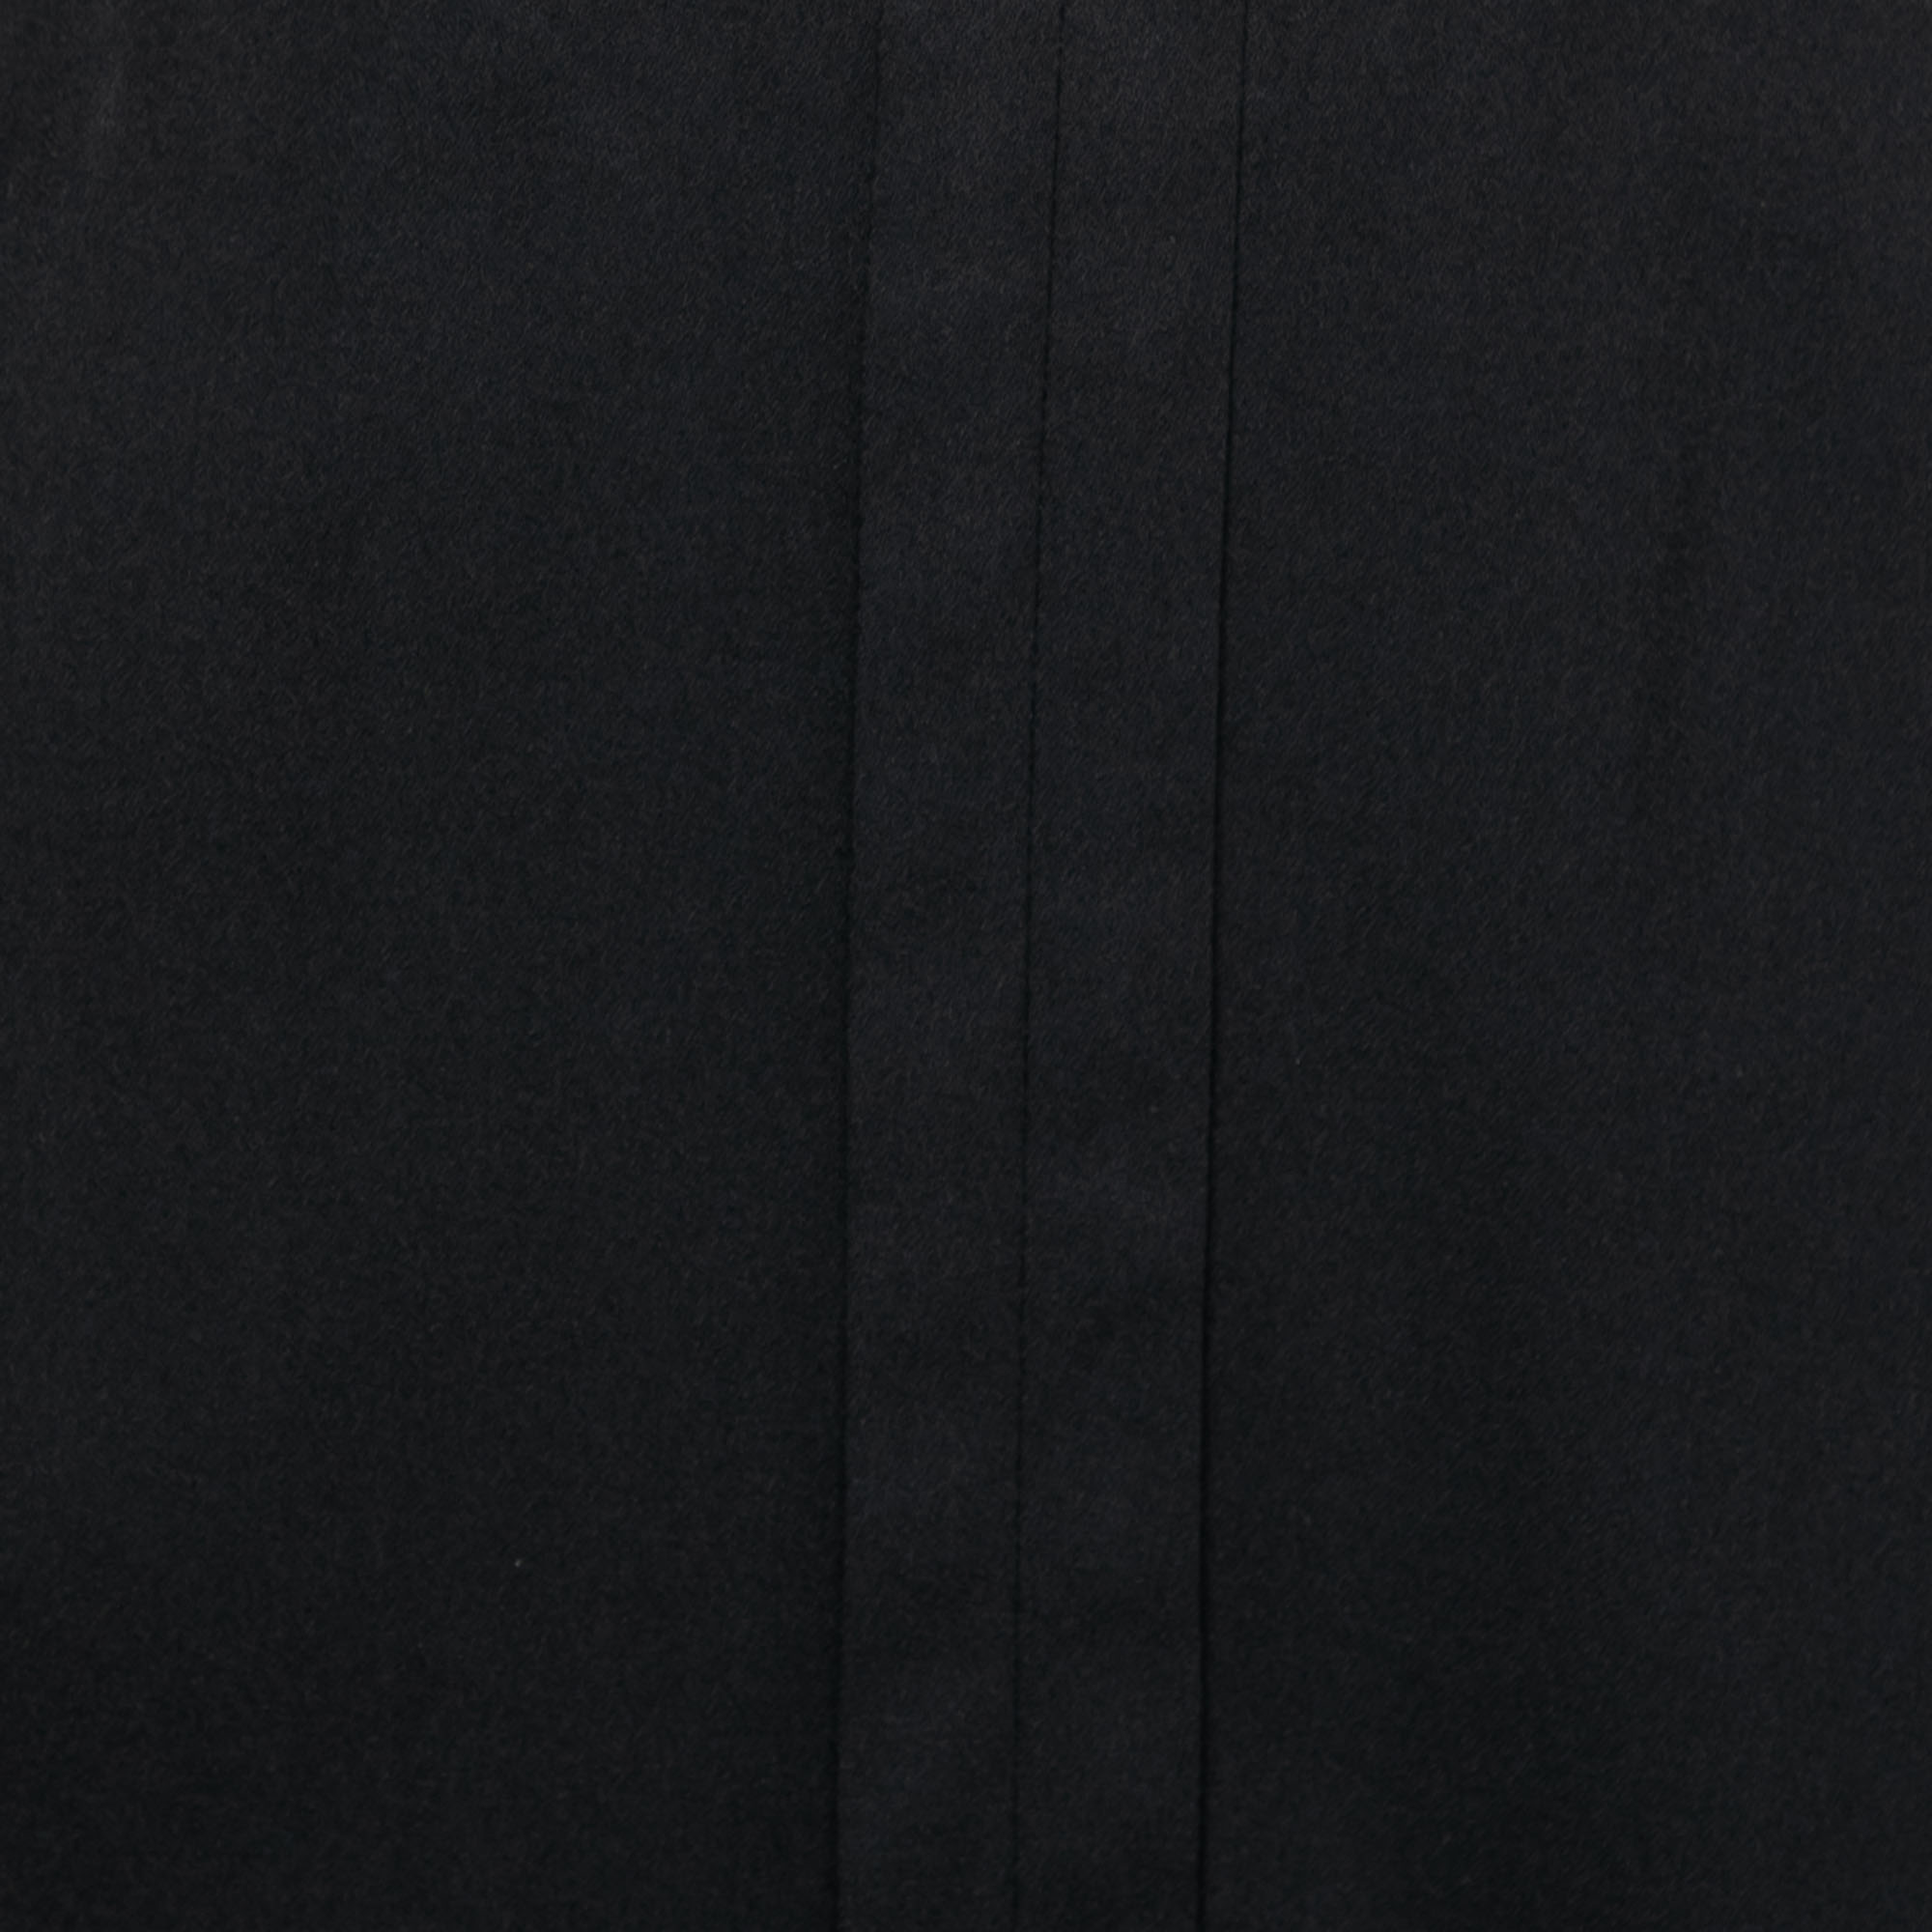 Emporio Armani Black Crepe Pleat Detail Short Skirt M